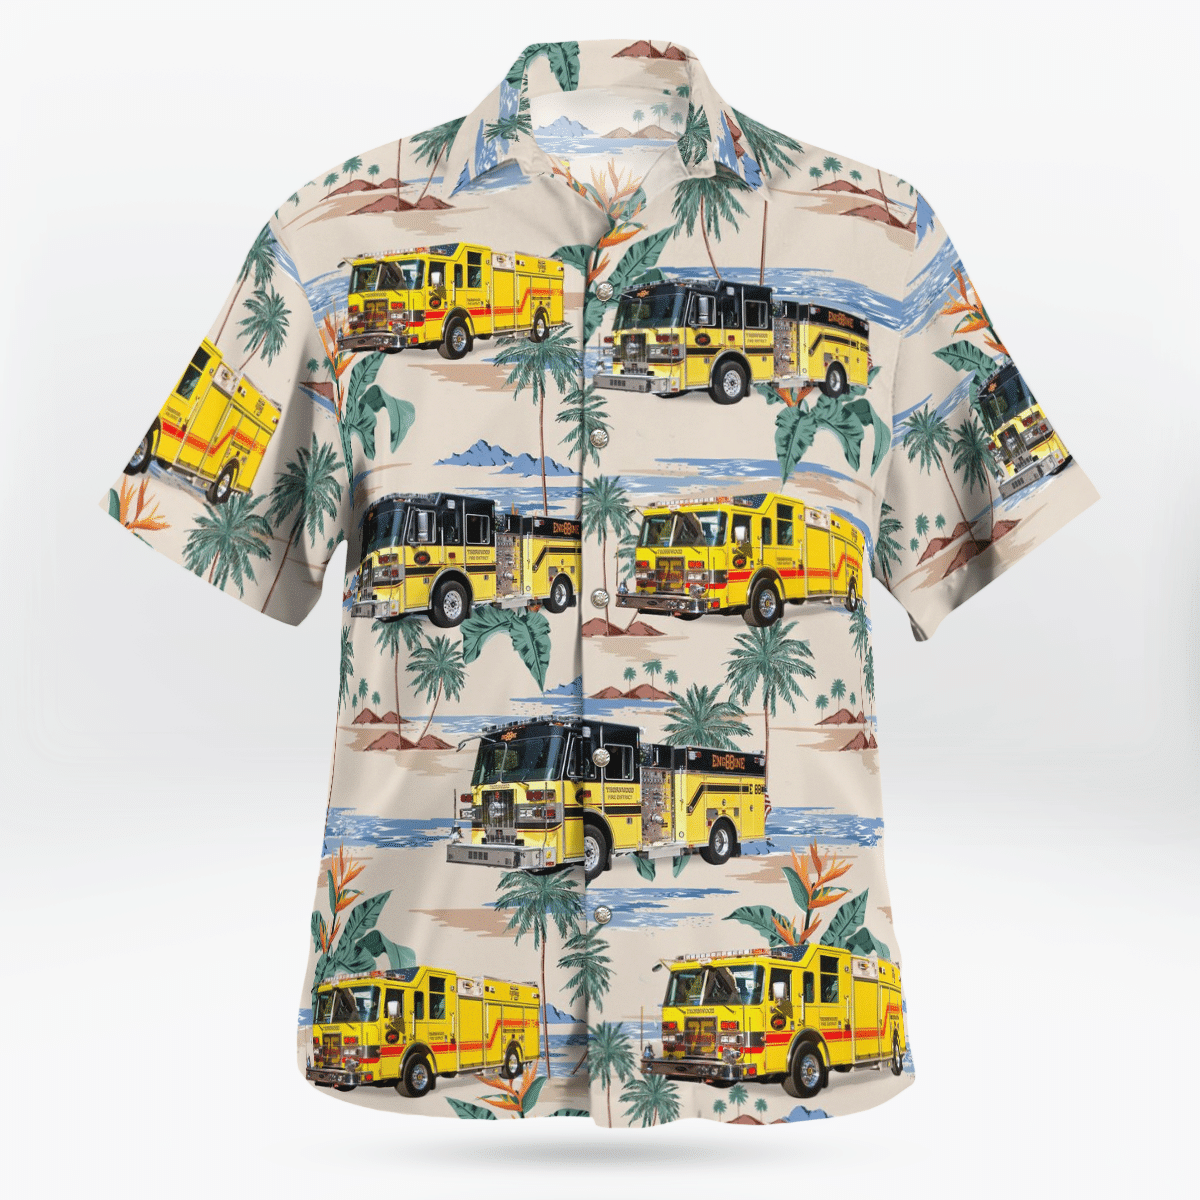 BEST Thornwood, New York, Thornwood Fire Department 3D Aloha Shirt2